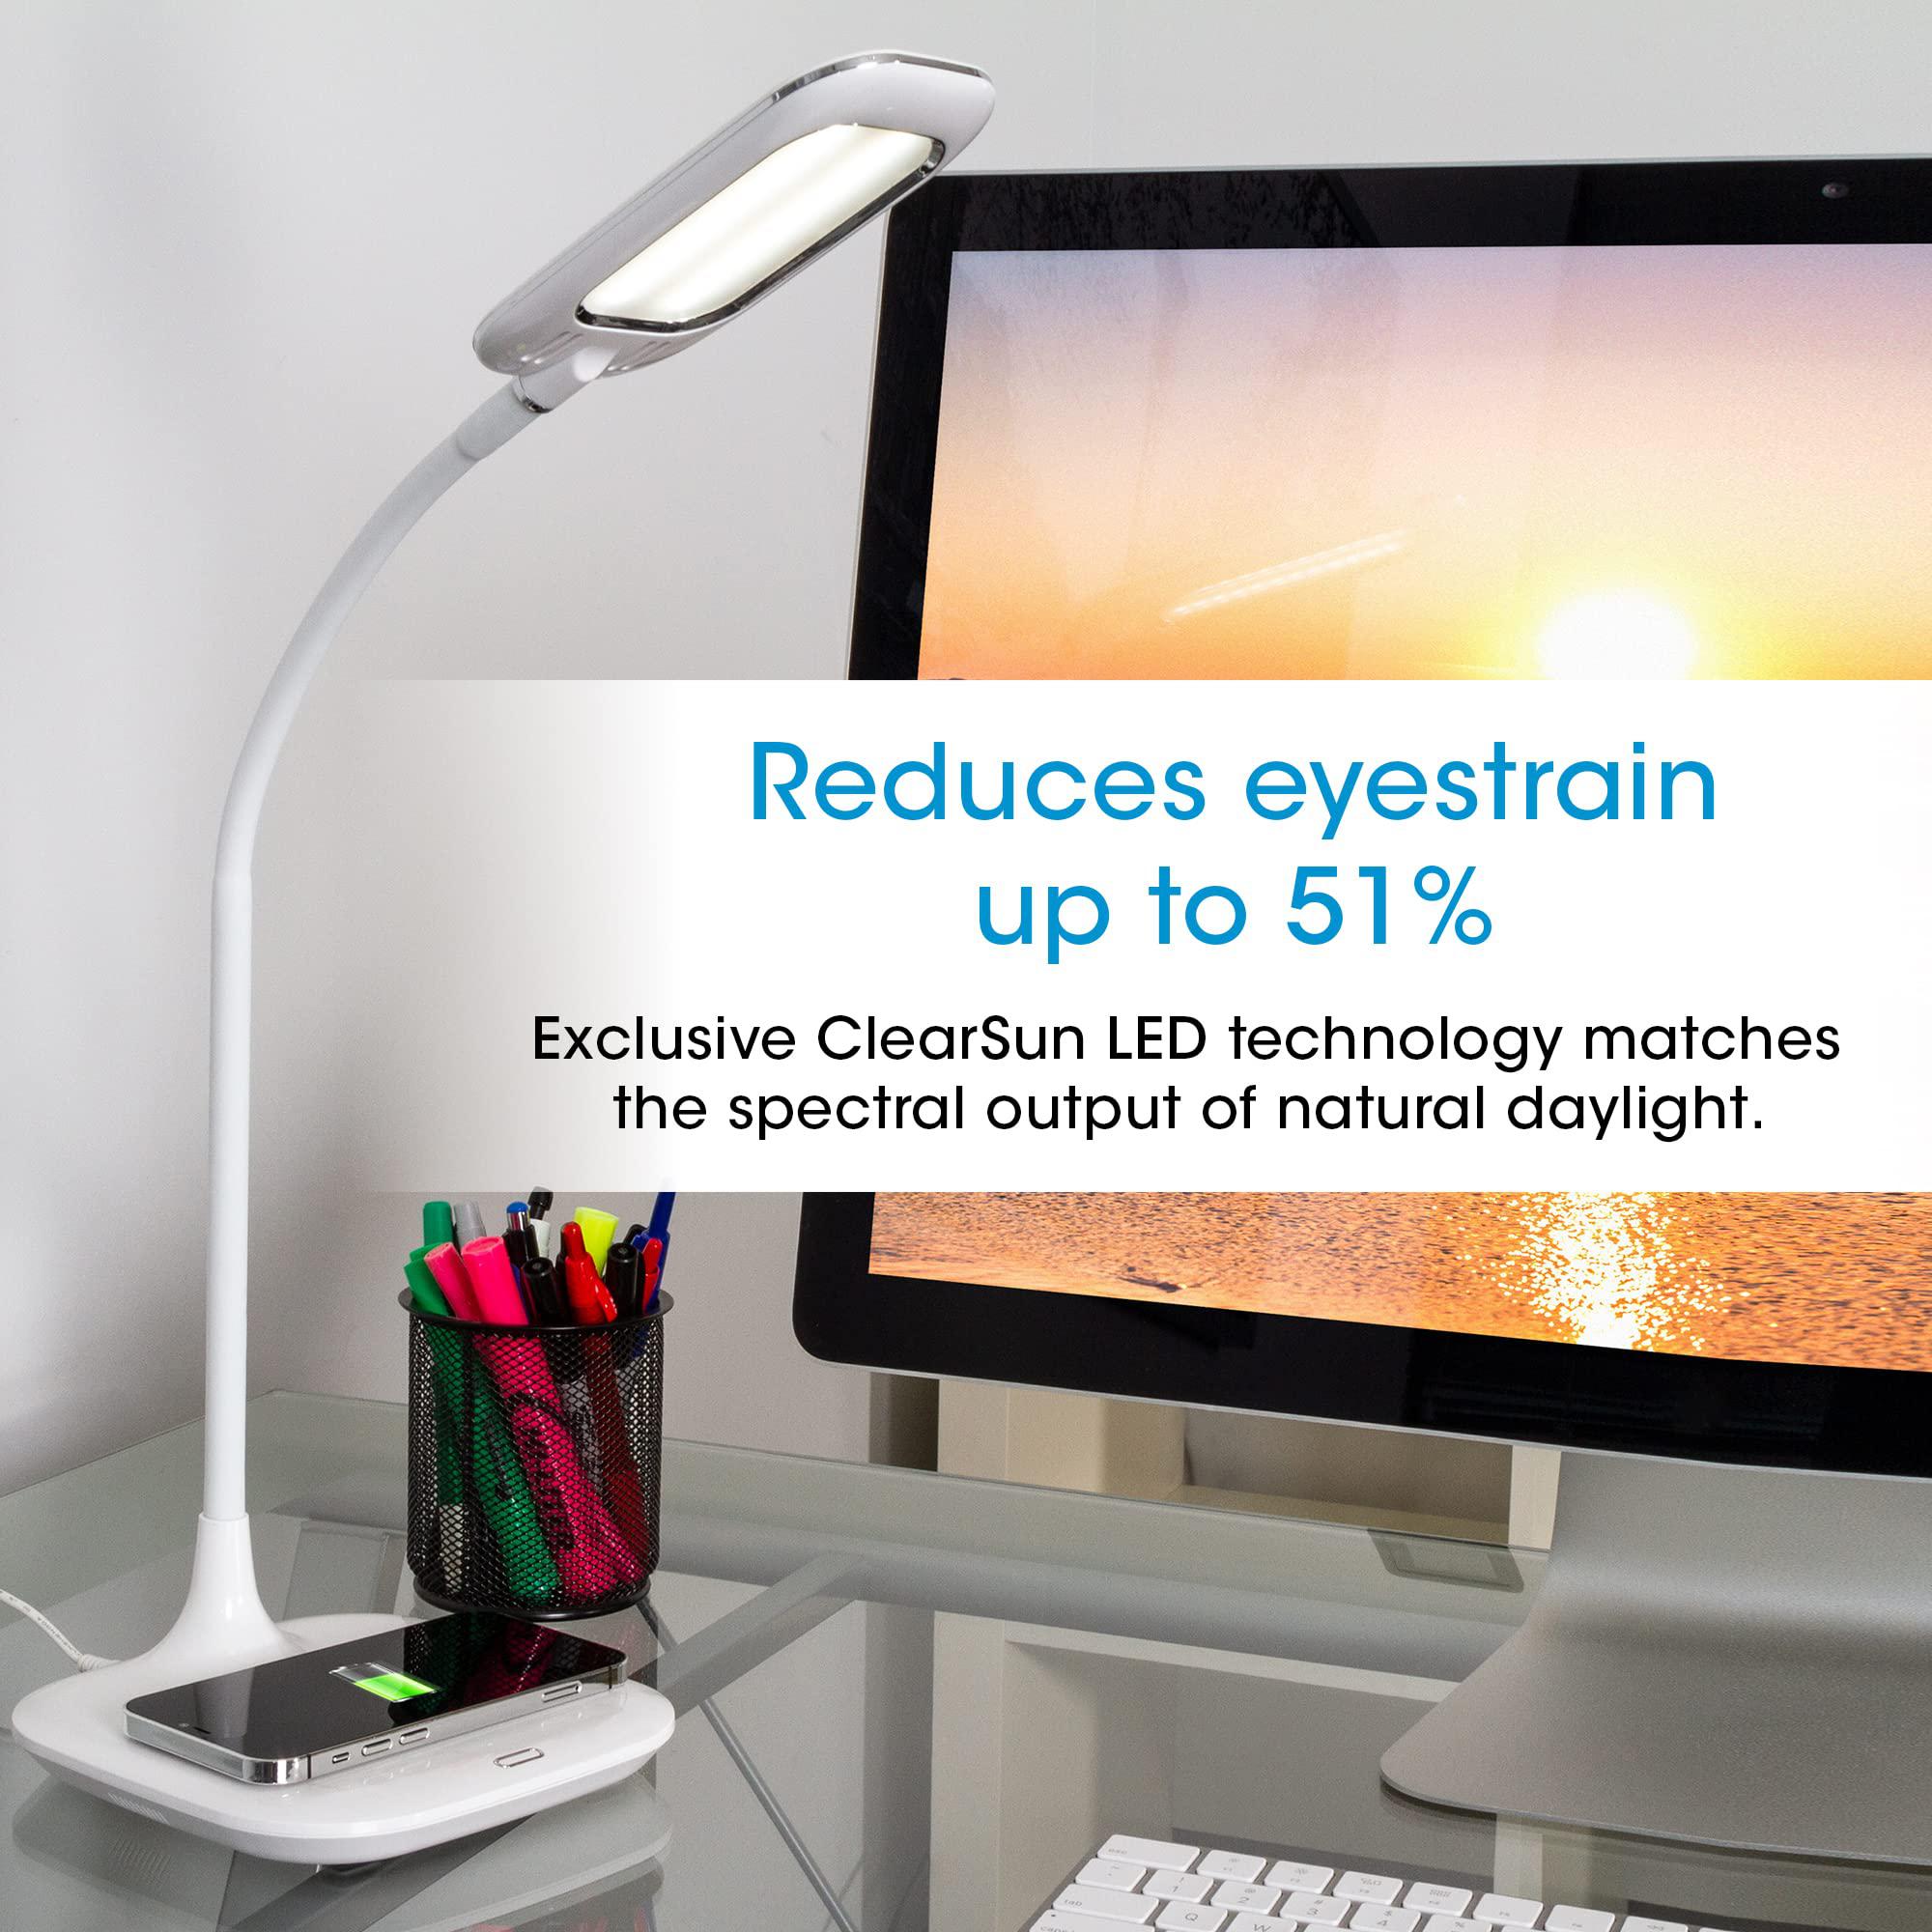 ottlite led desk lamp with wireless charging, prevention designed to reduce eyestrain - adjustable flexible neck, 3 color mod